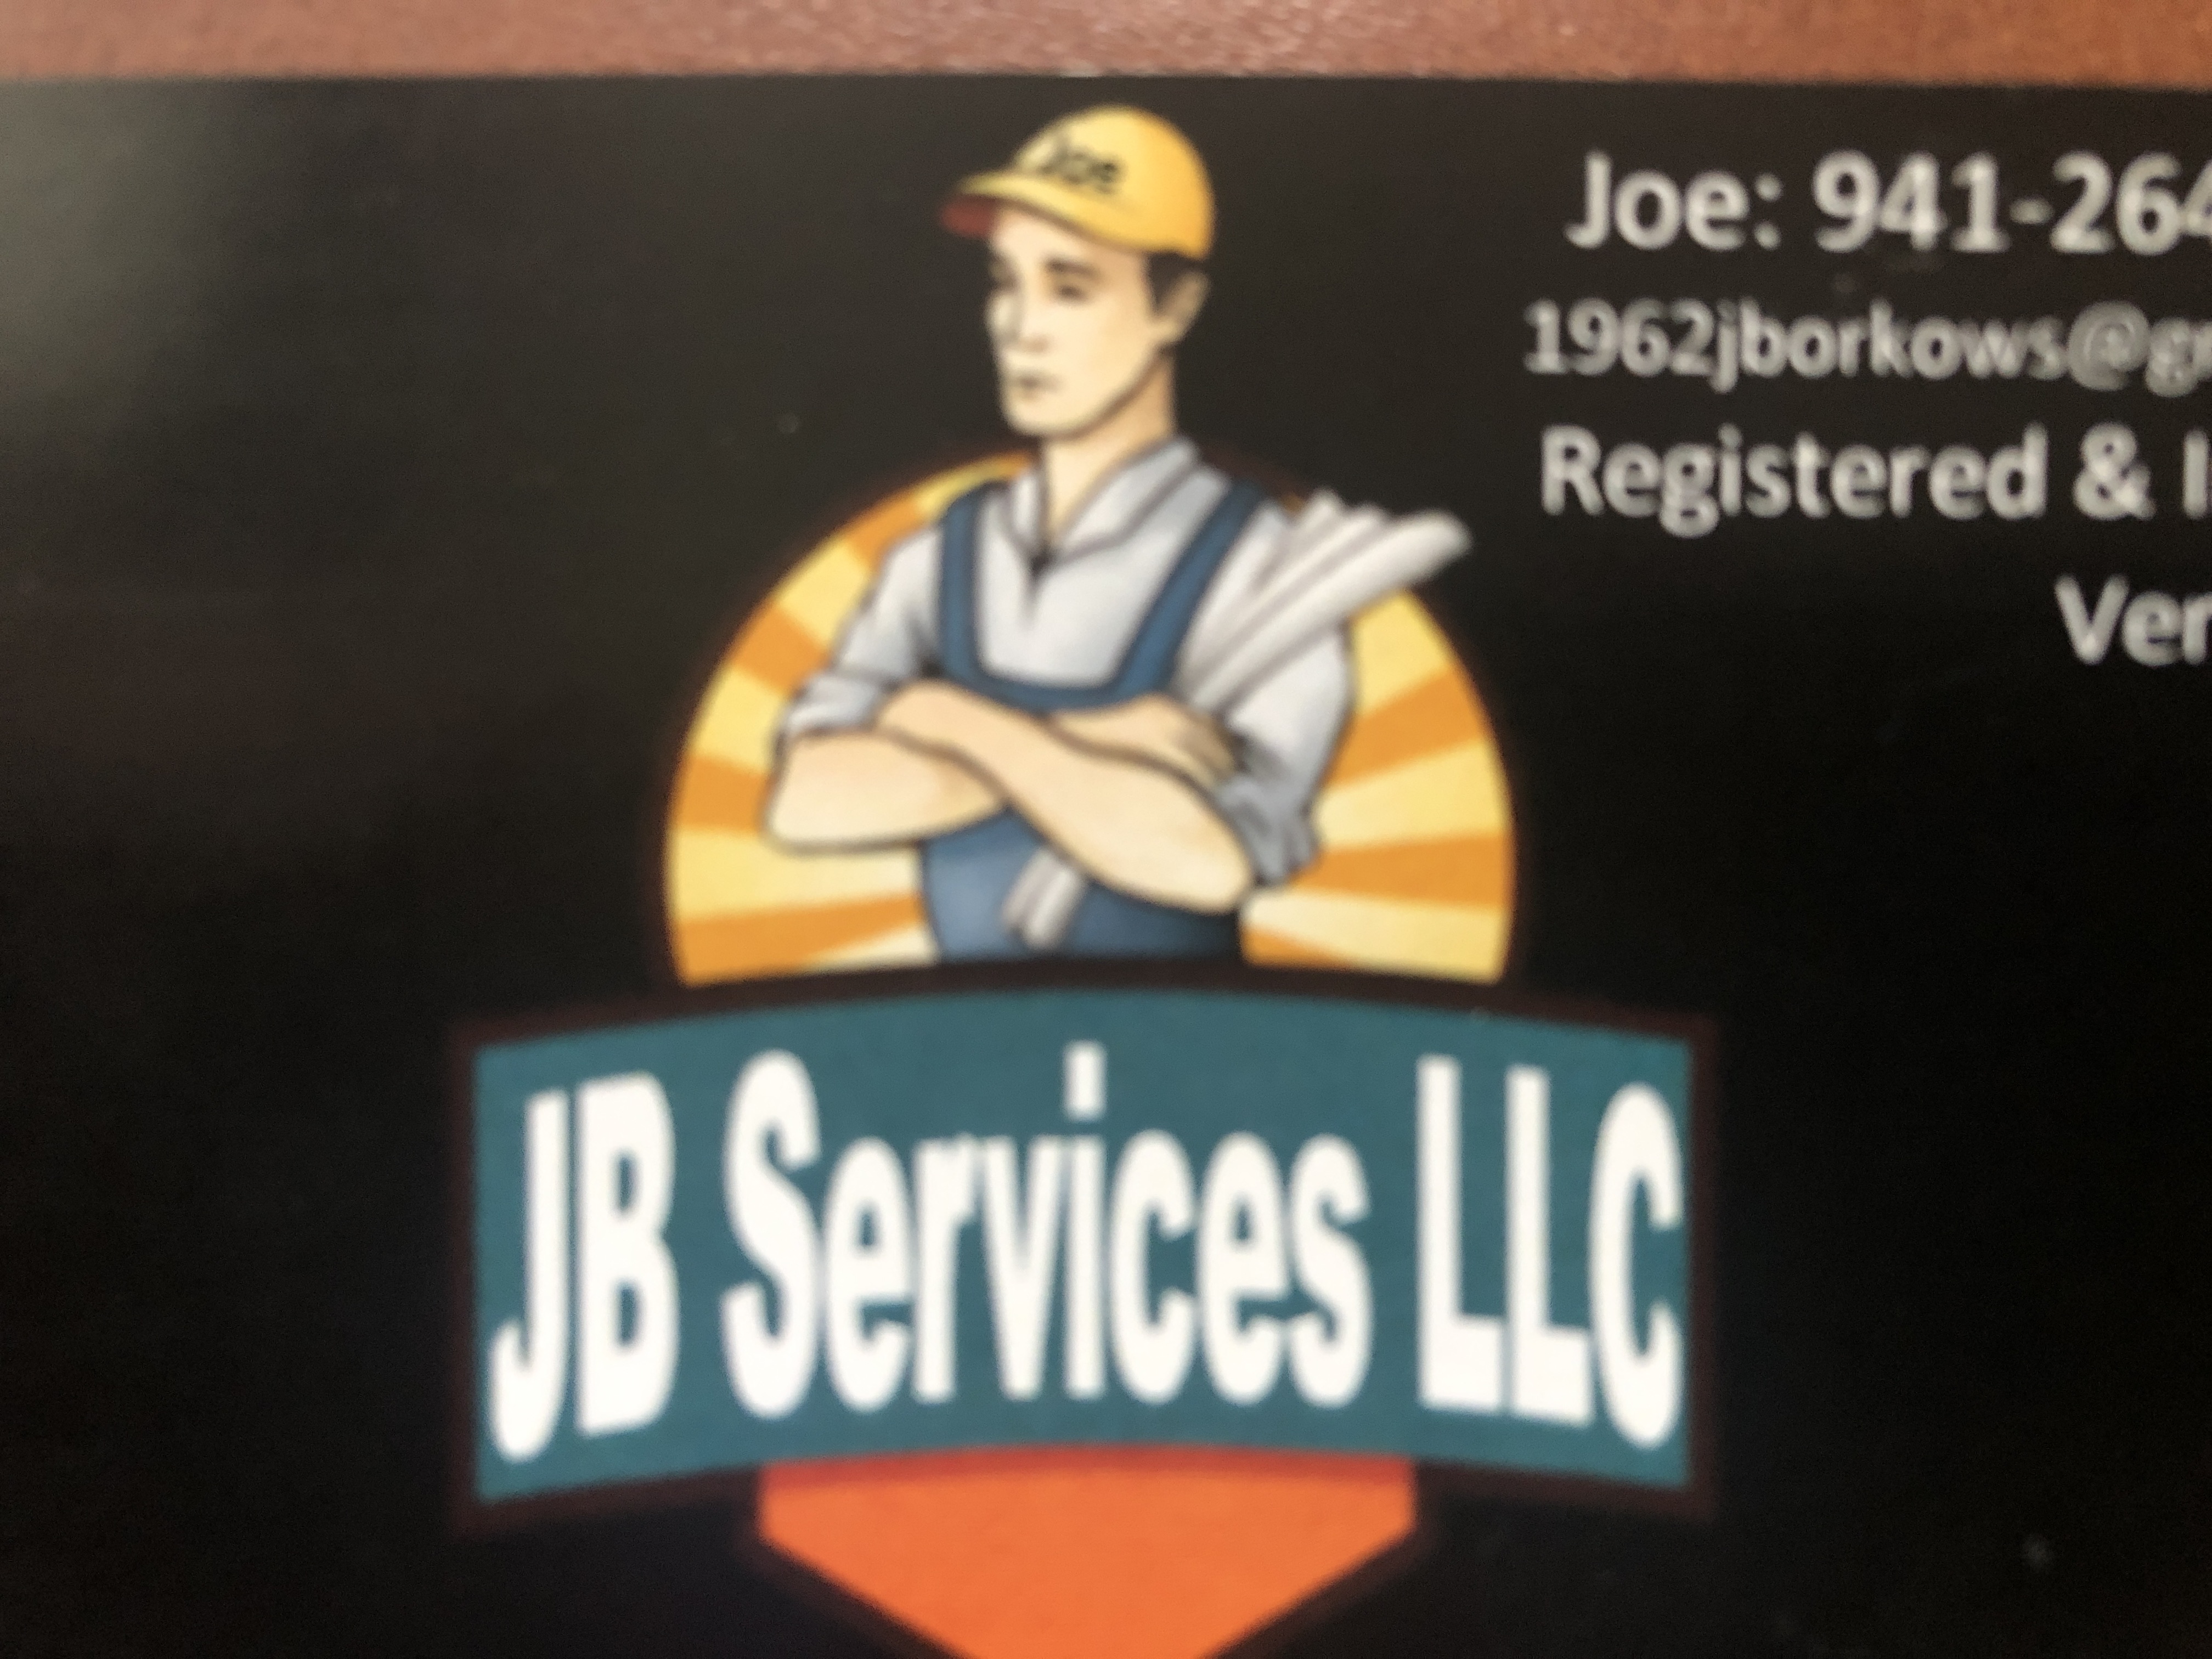 JB Services Logo